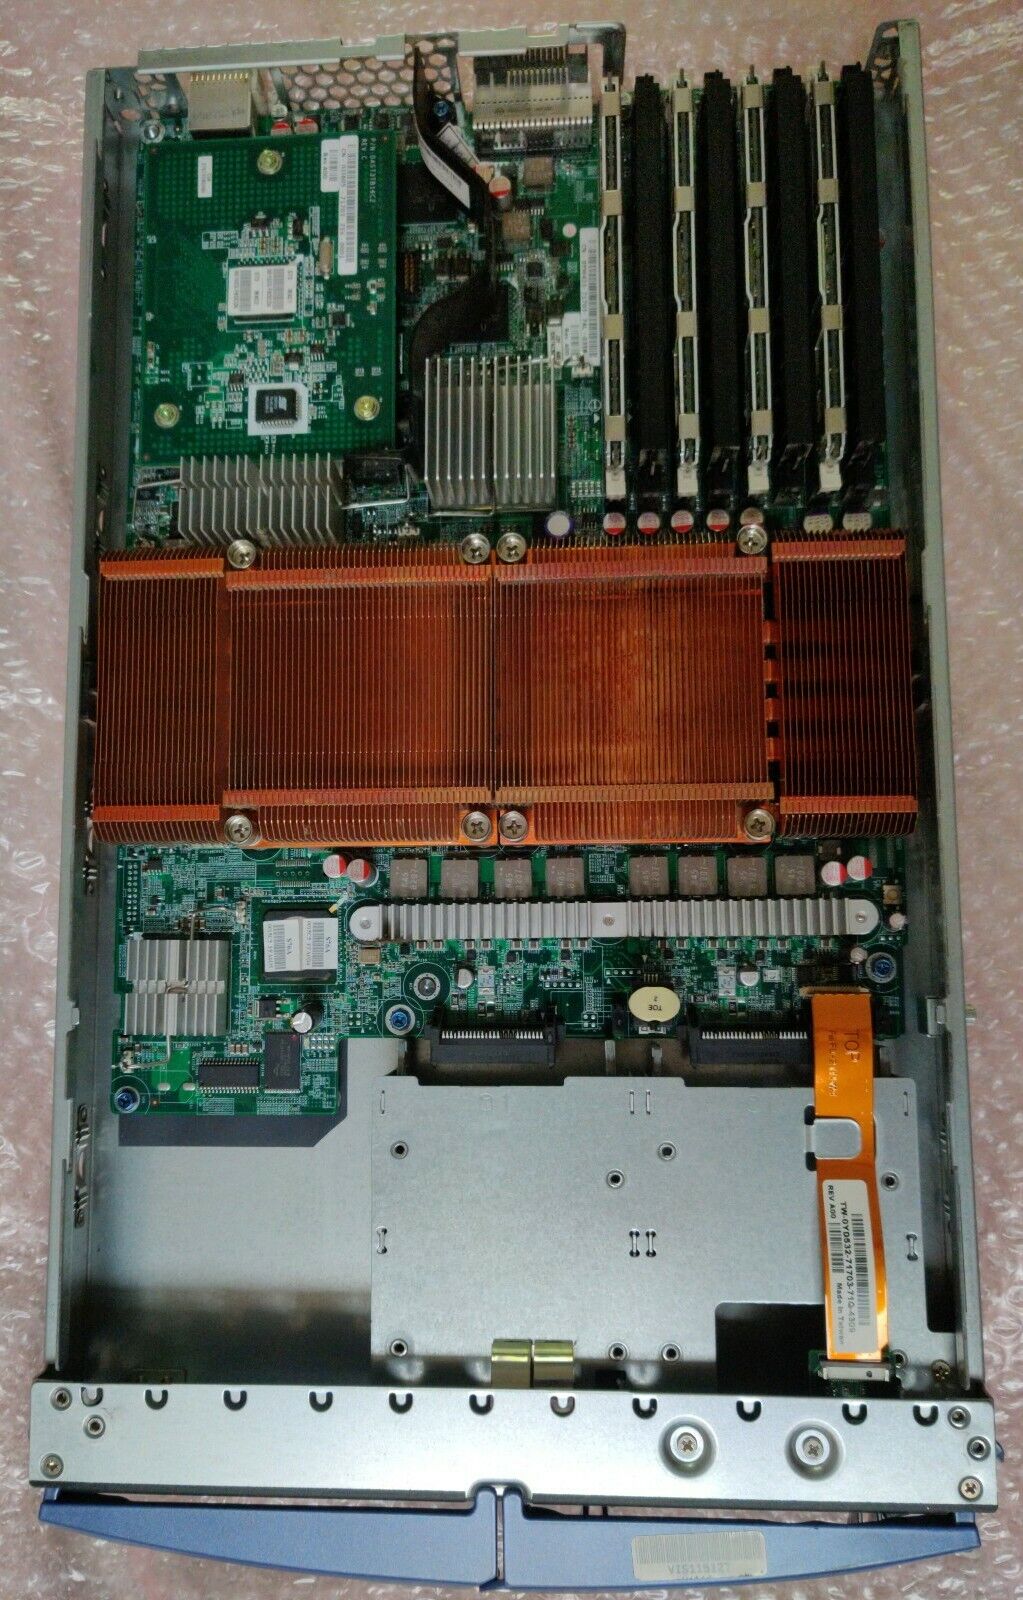 PowerEdge 1955 2x Xeon 5148 2.33Ghz 8GB RAM, DAS73TB16C2 Dual Gigabit, No HD